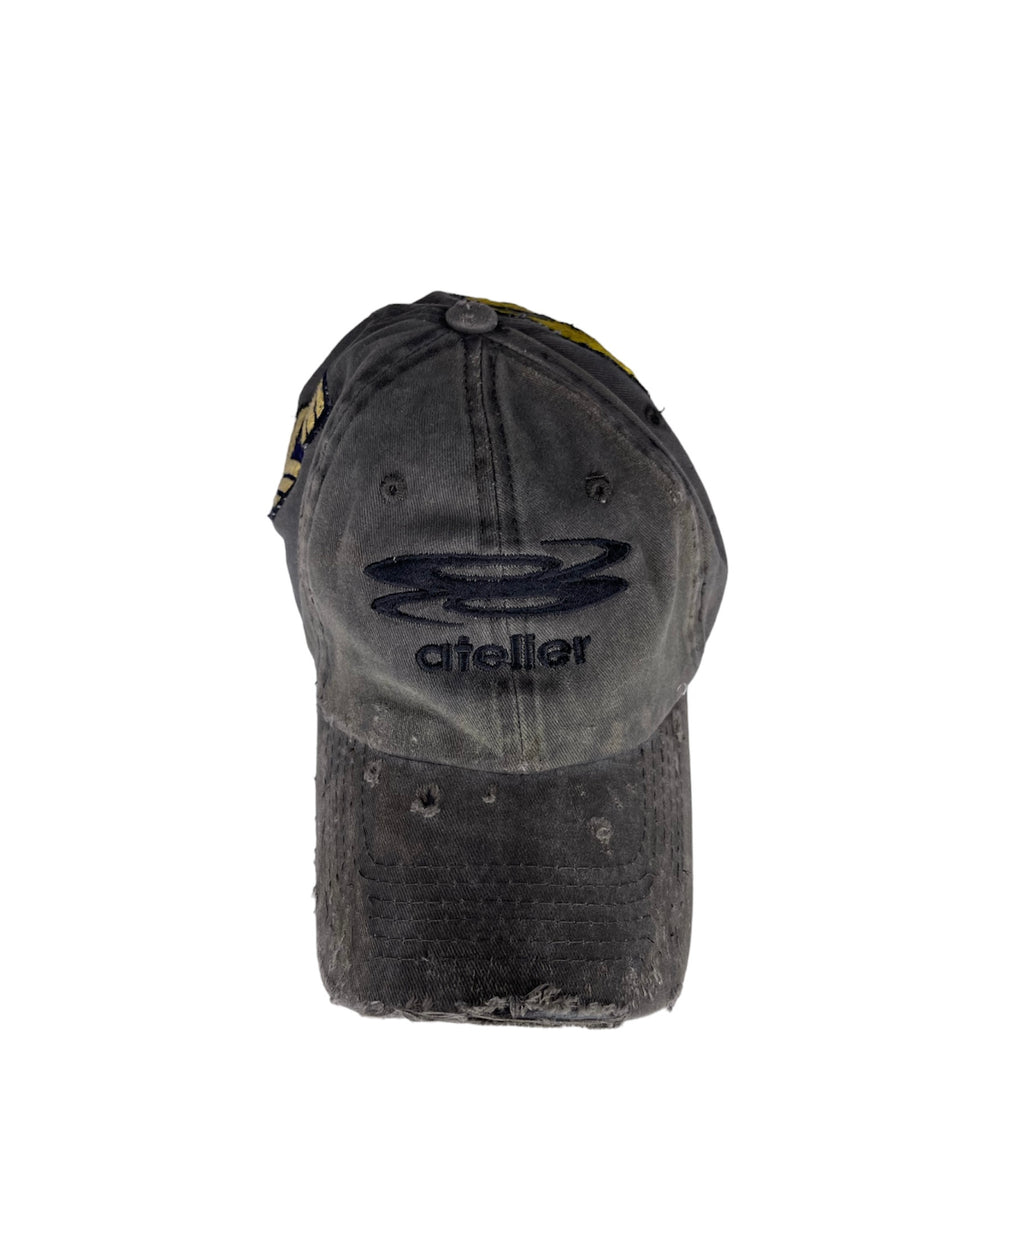 Atelier patch Distressed cap